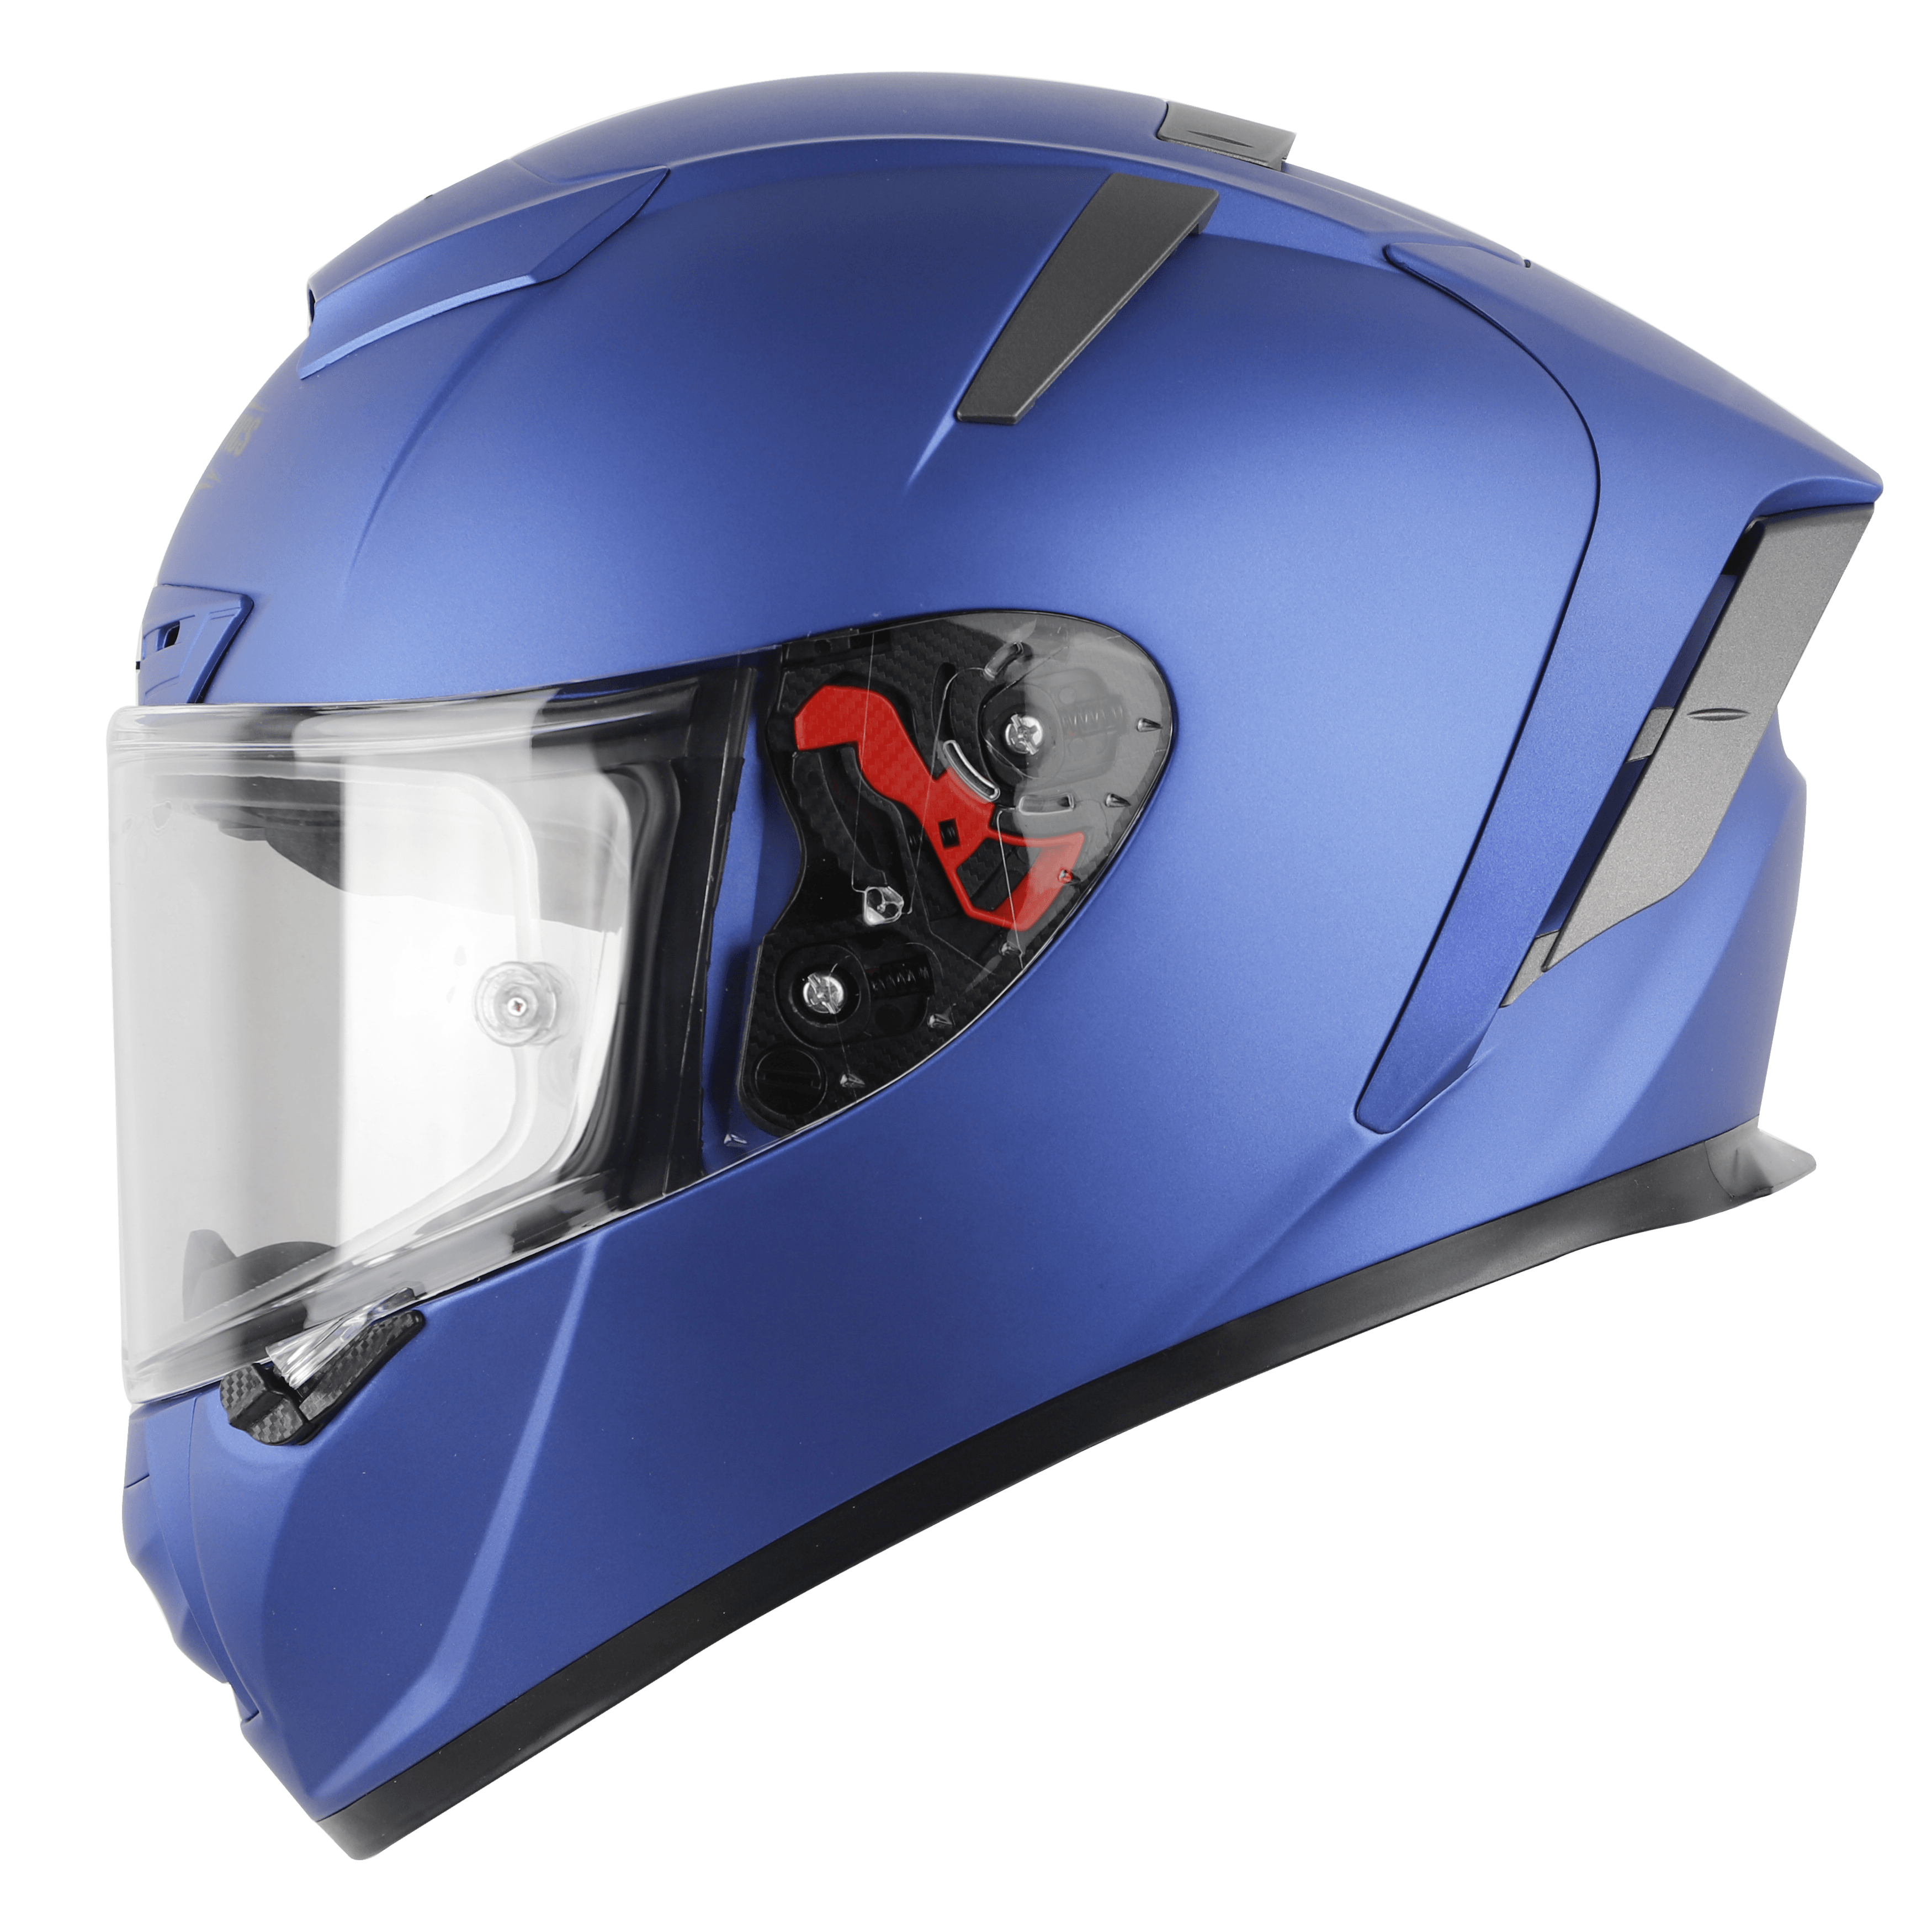 Steelbird Aeronautics SA-5 DOT Helmet with Clear Anti-Fog Shield Visor (Mat Blue)